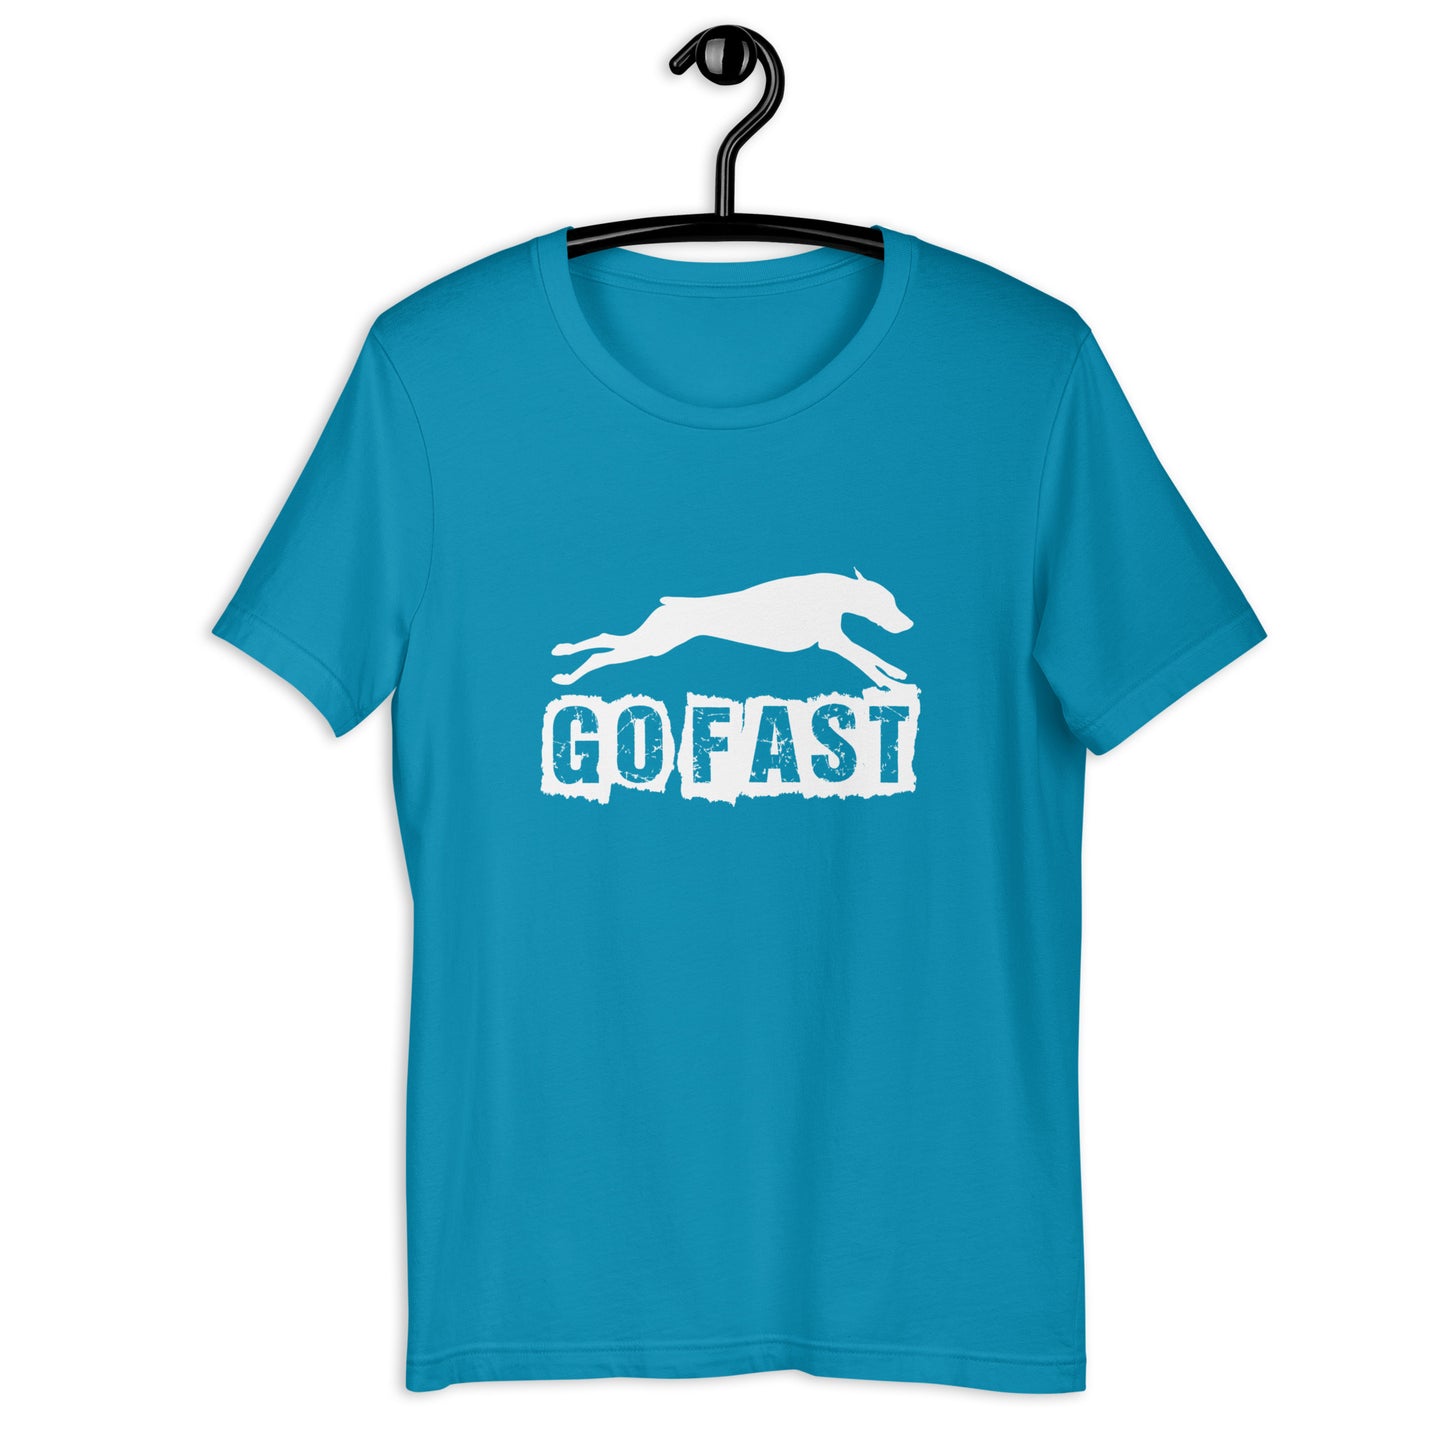 GO FAST - DOBIE - Unisex t-shirt